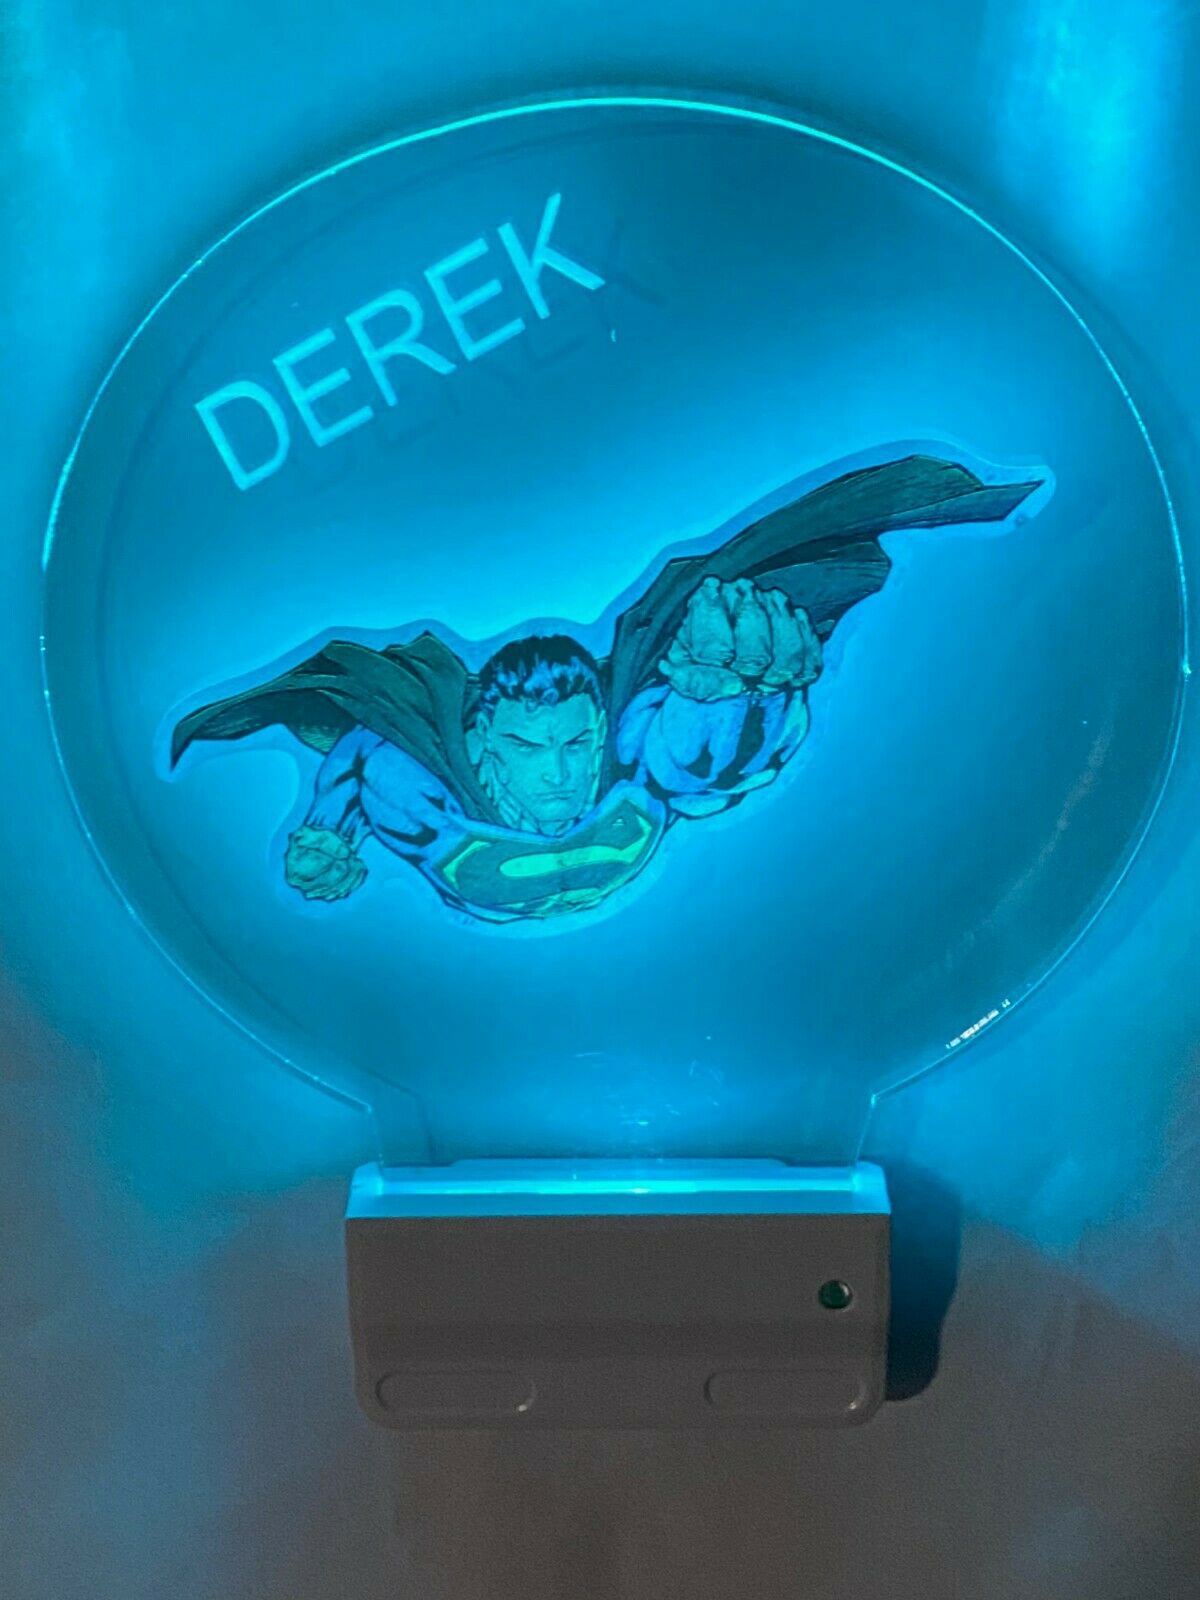 Superman Superheroes Night Light Personalized Led Plug In W/ Dusk To Dawn Sensor